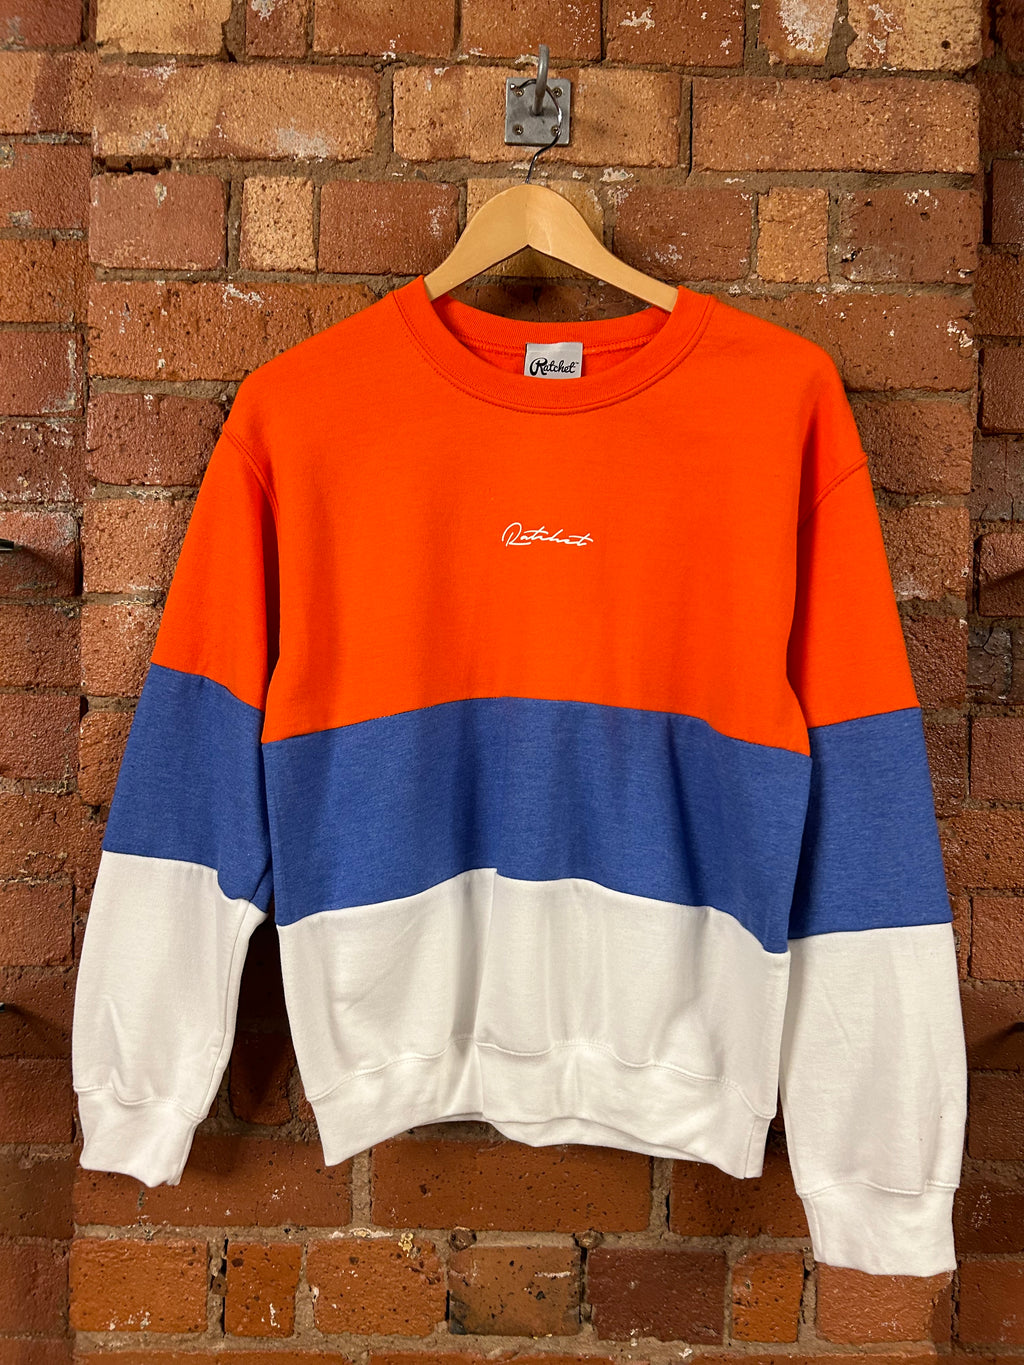 SALE ADULTS White, Orange & Blue Panel Sweatshirt small